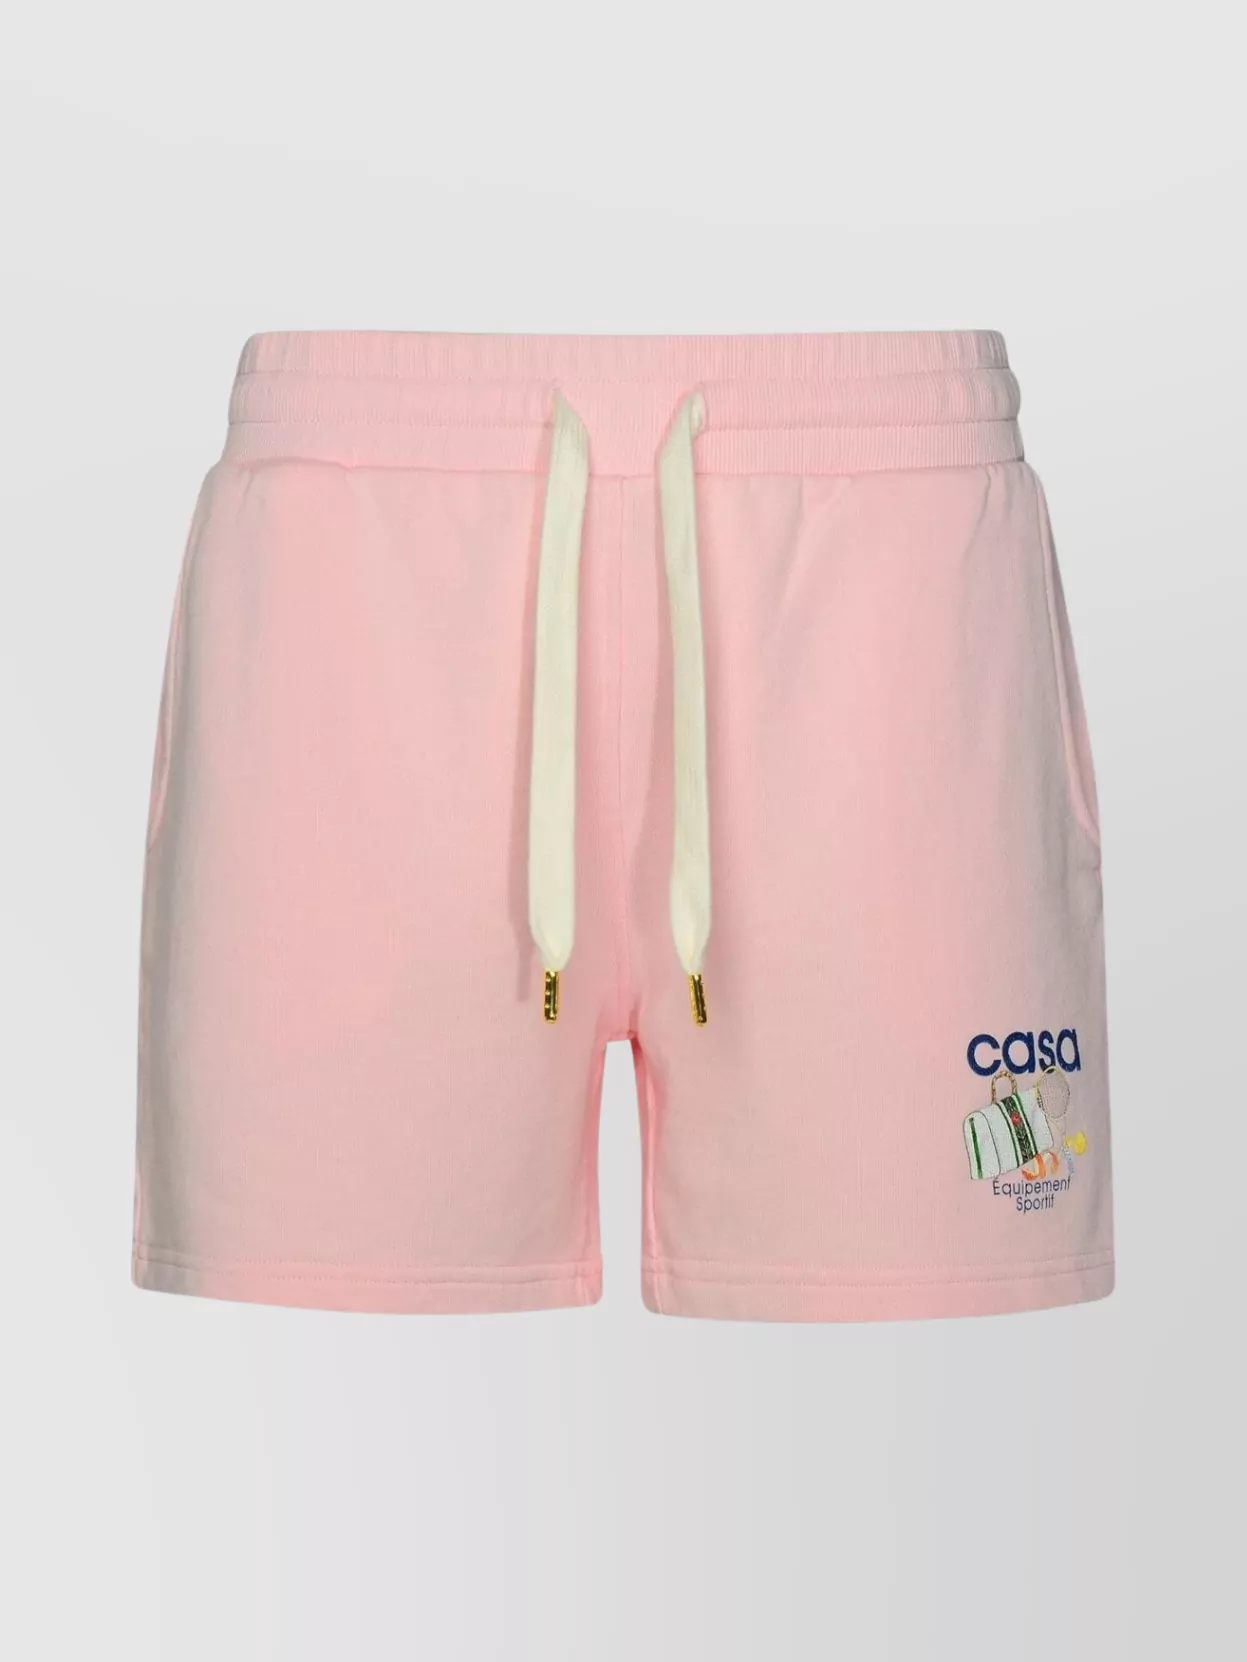 Casablanca Sports Equipment Organic Cotton Shorts